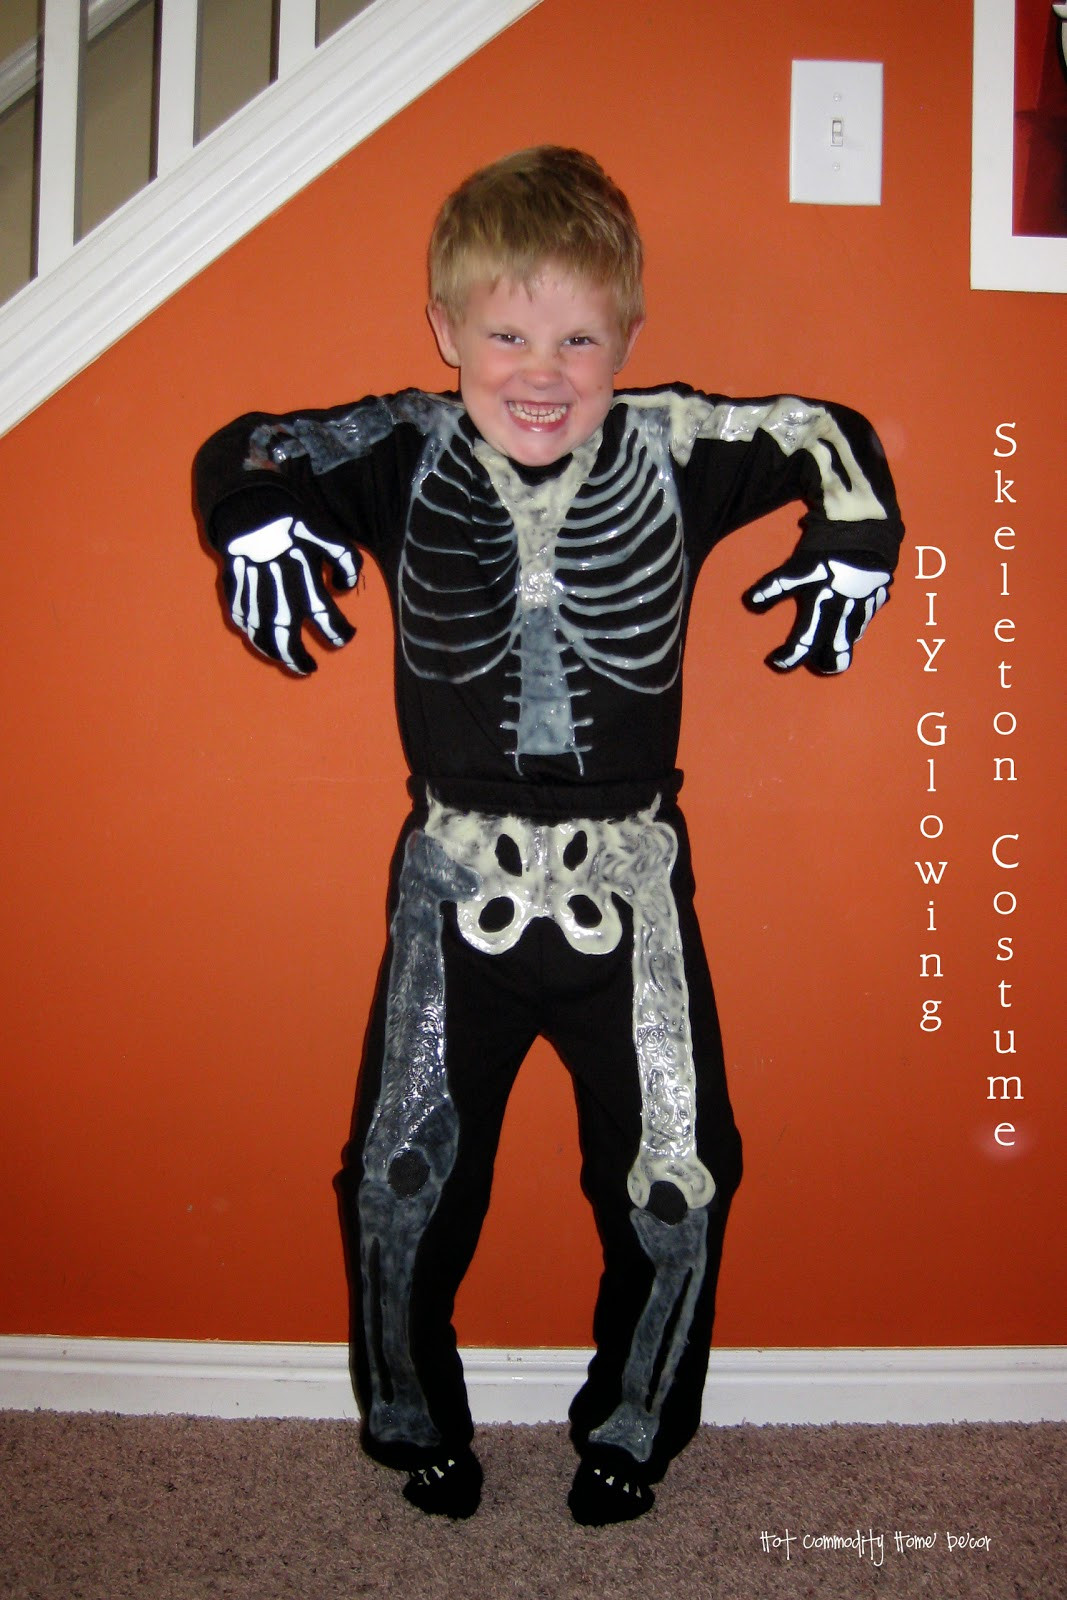 DIY Kids Skeleton Costume
 Hot modity Home Decor DIY Halloween Costumes Glowing